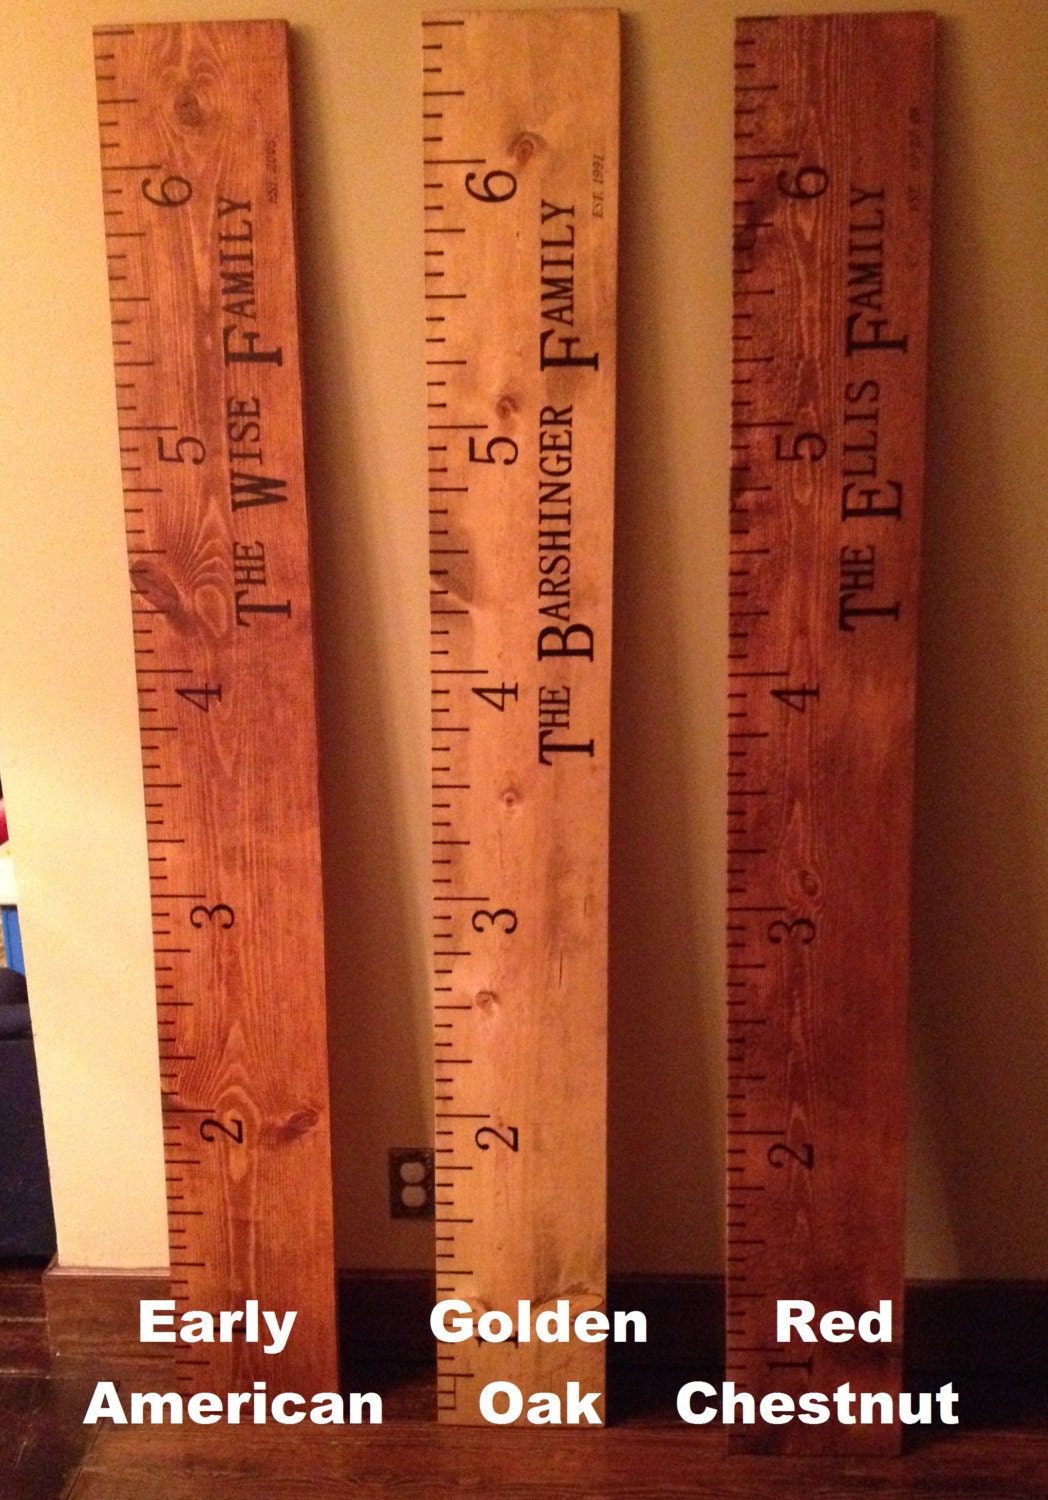 life size ruler measurements